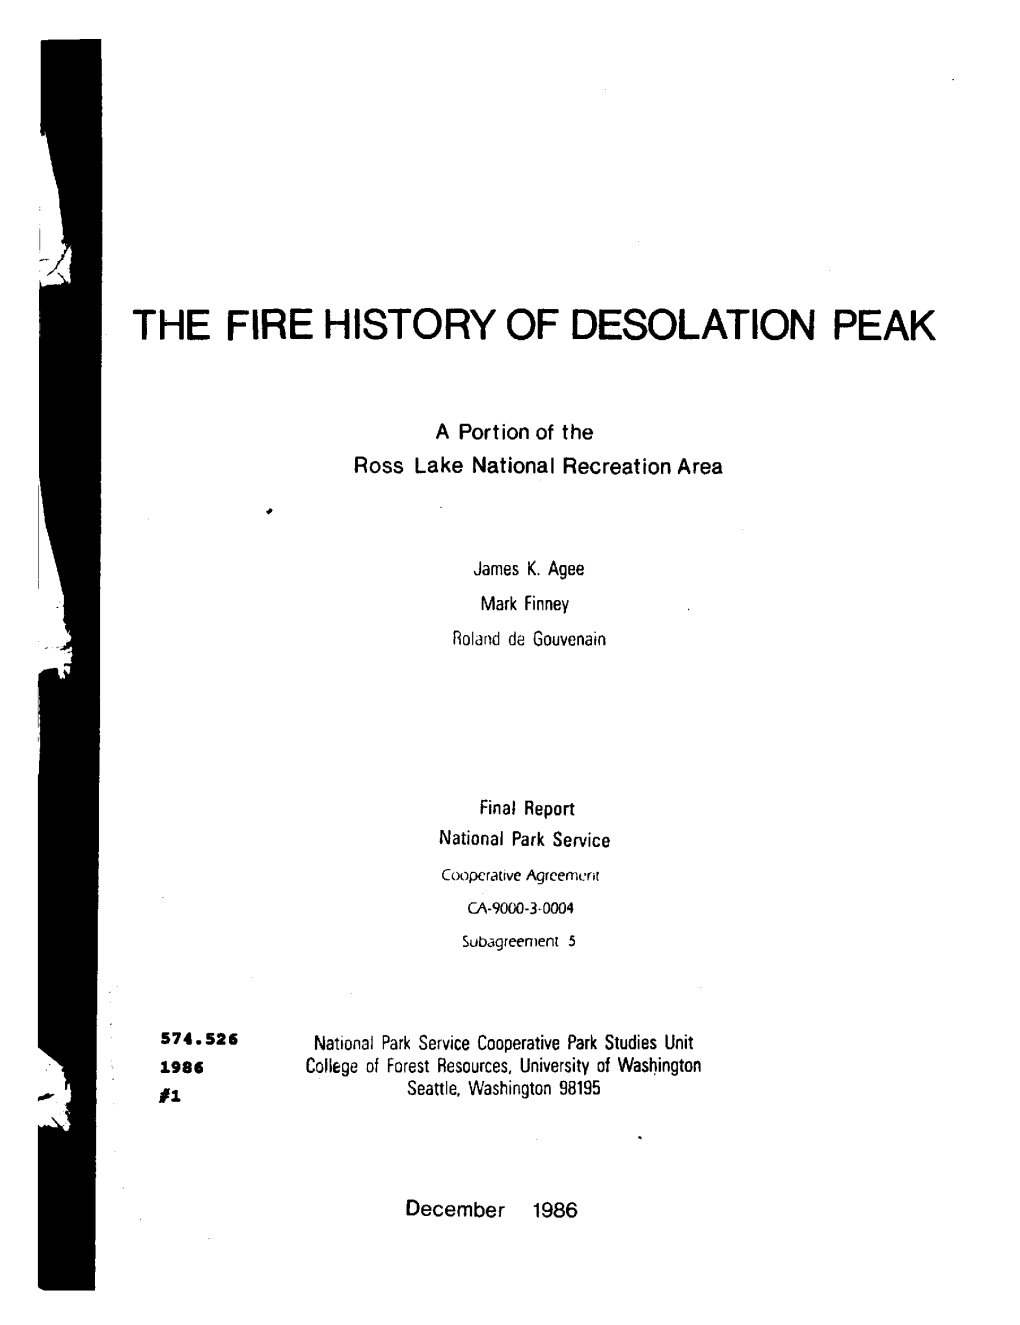 The Fire History of Desolation Peak